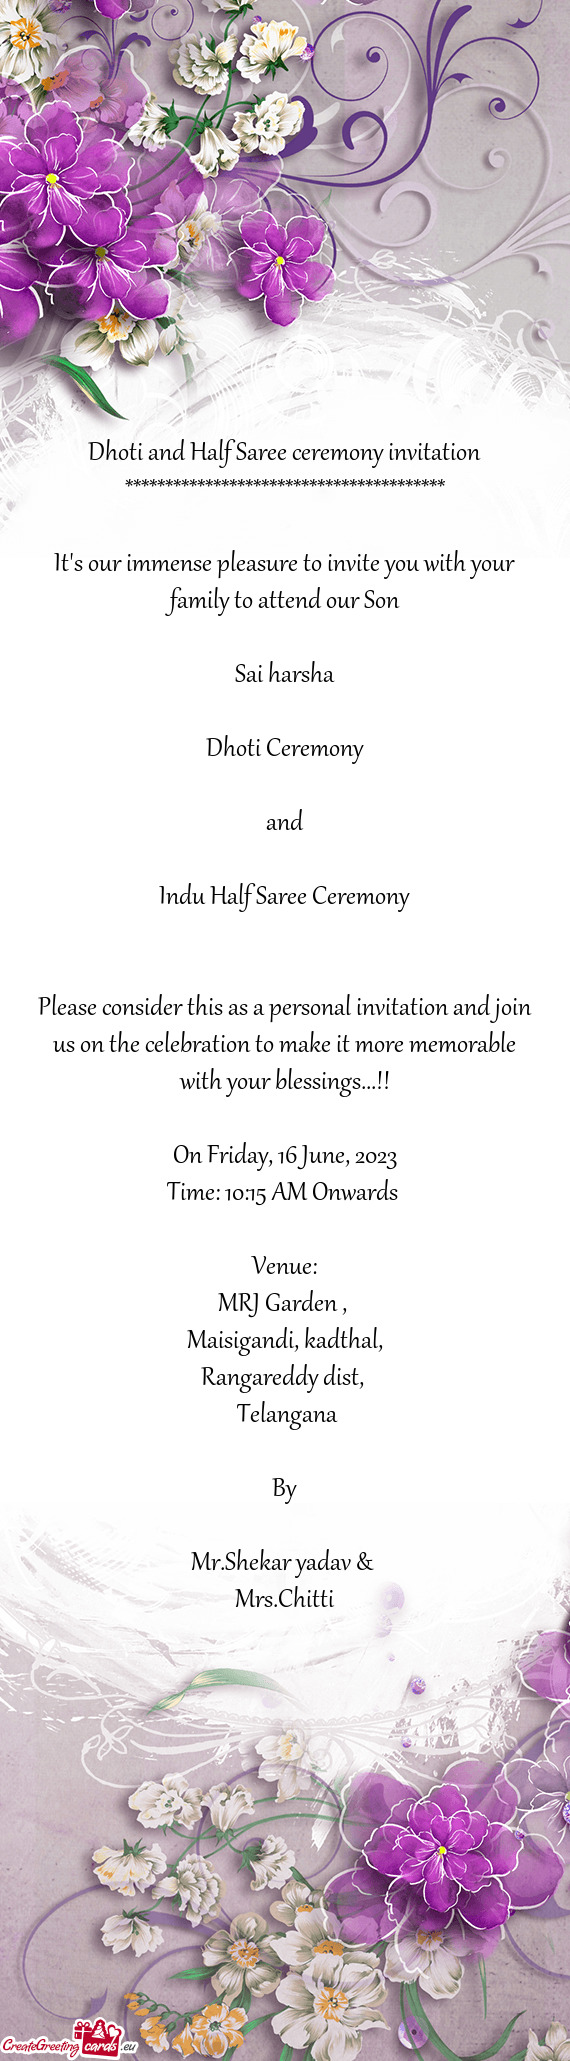 Indu Half Saree Ceremony